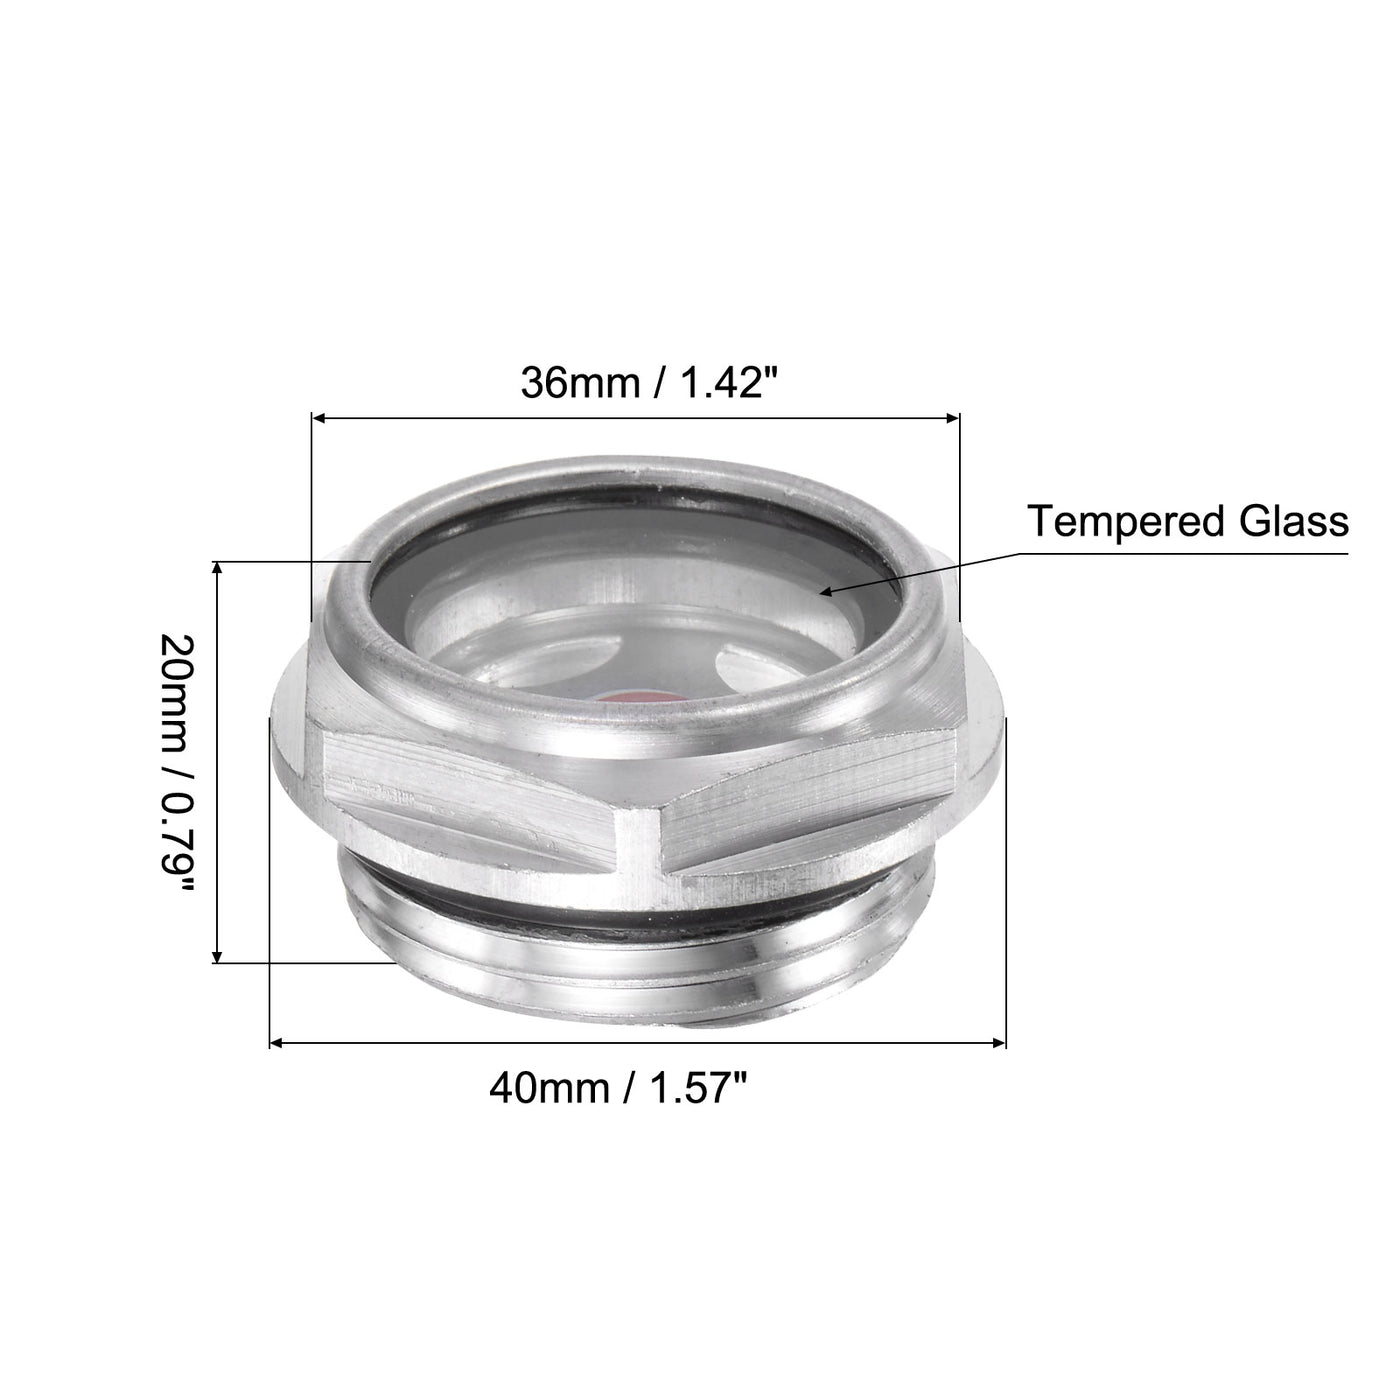 uxcell Uxcell Air Compressor Oil Level Gauge Sight Glass G1 Male Thread Aluminum